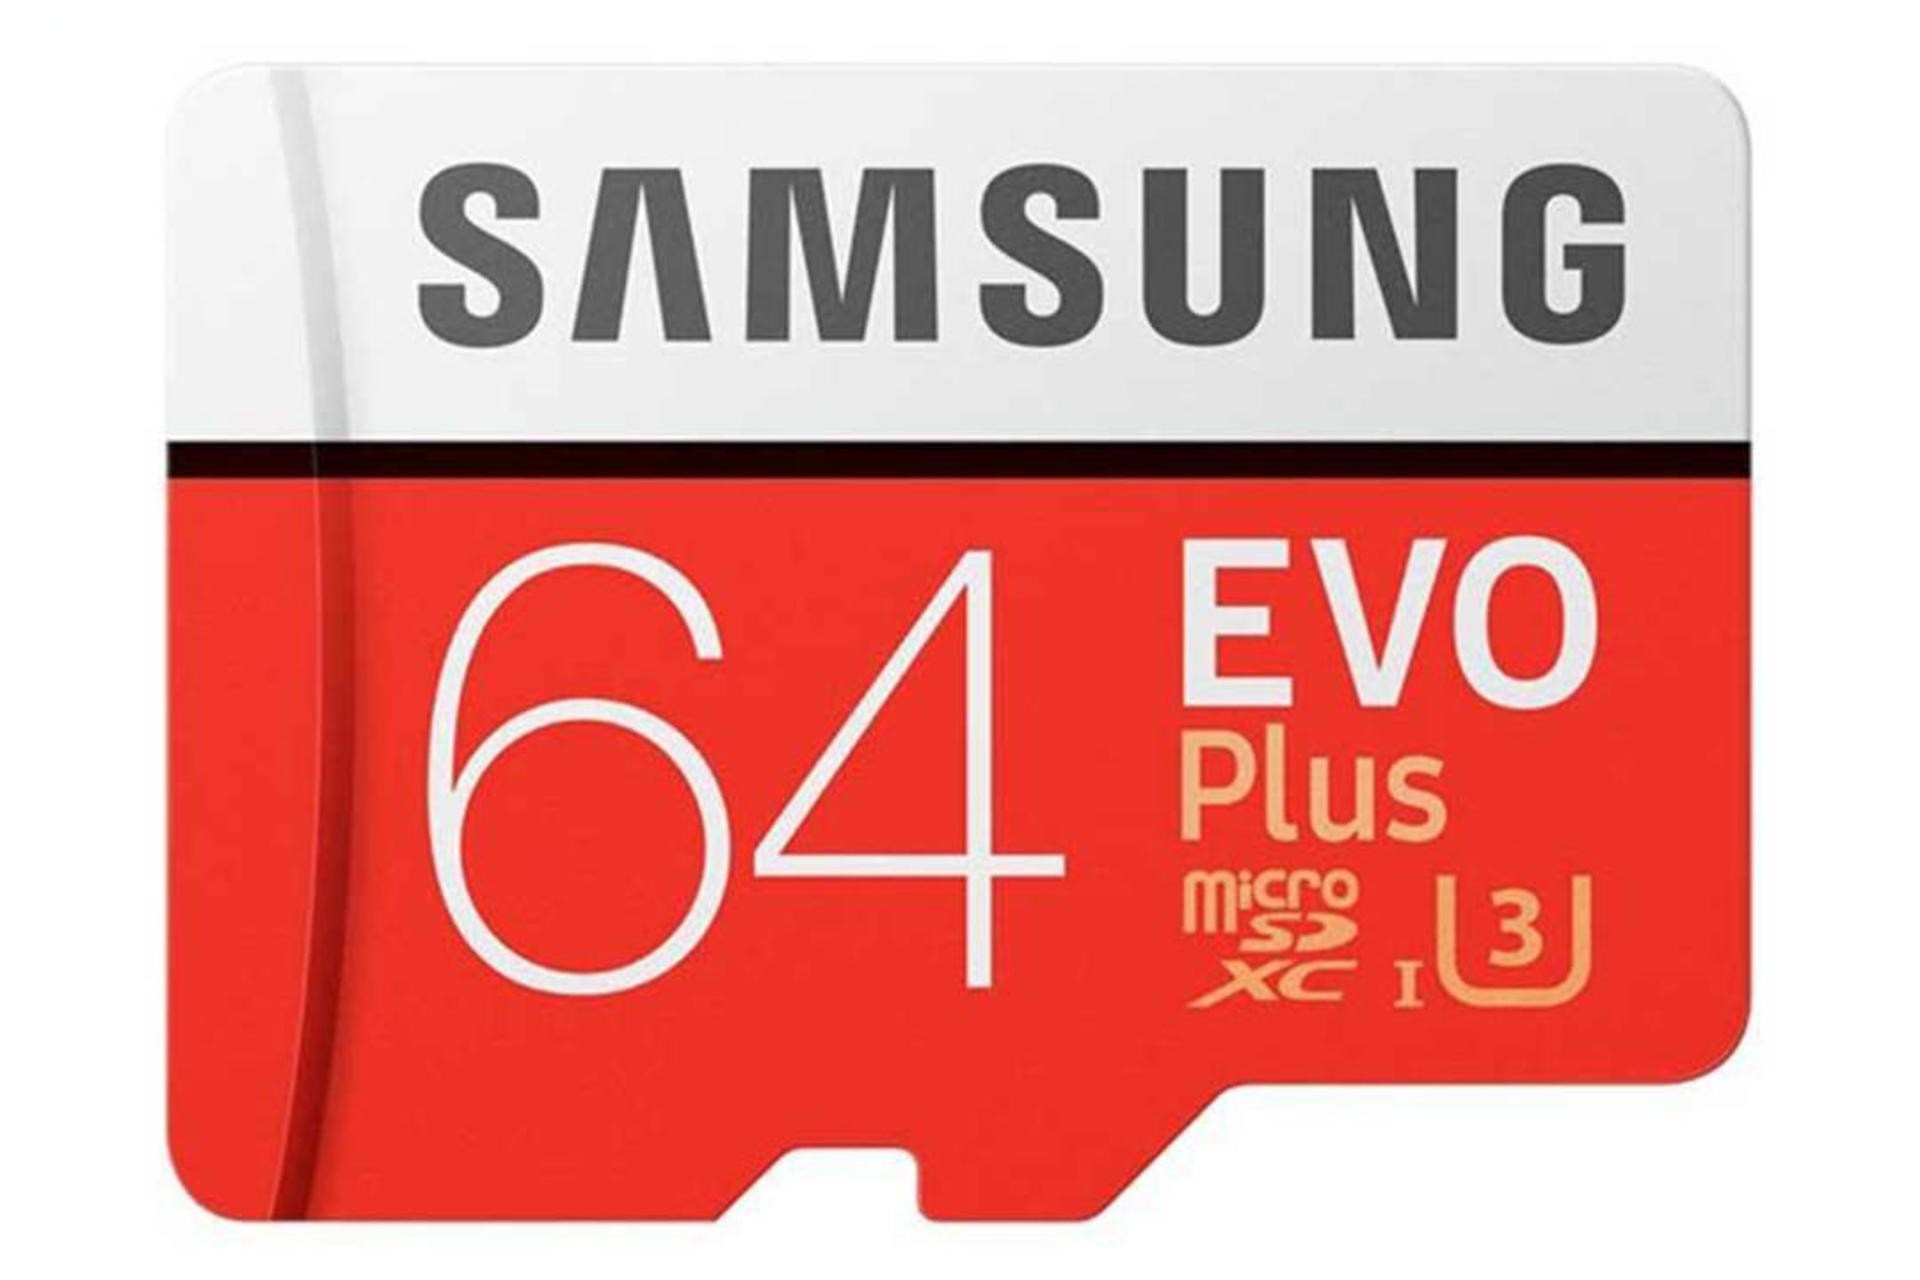 Samsung Evo Plus microSDHC Class 10 UHS-I U1 64GB